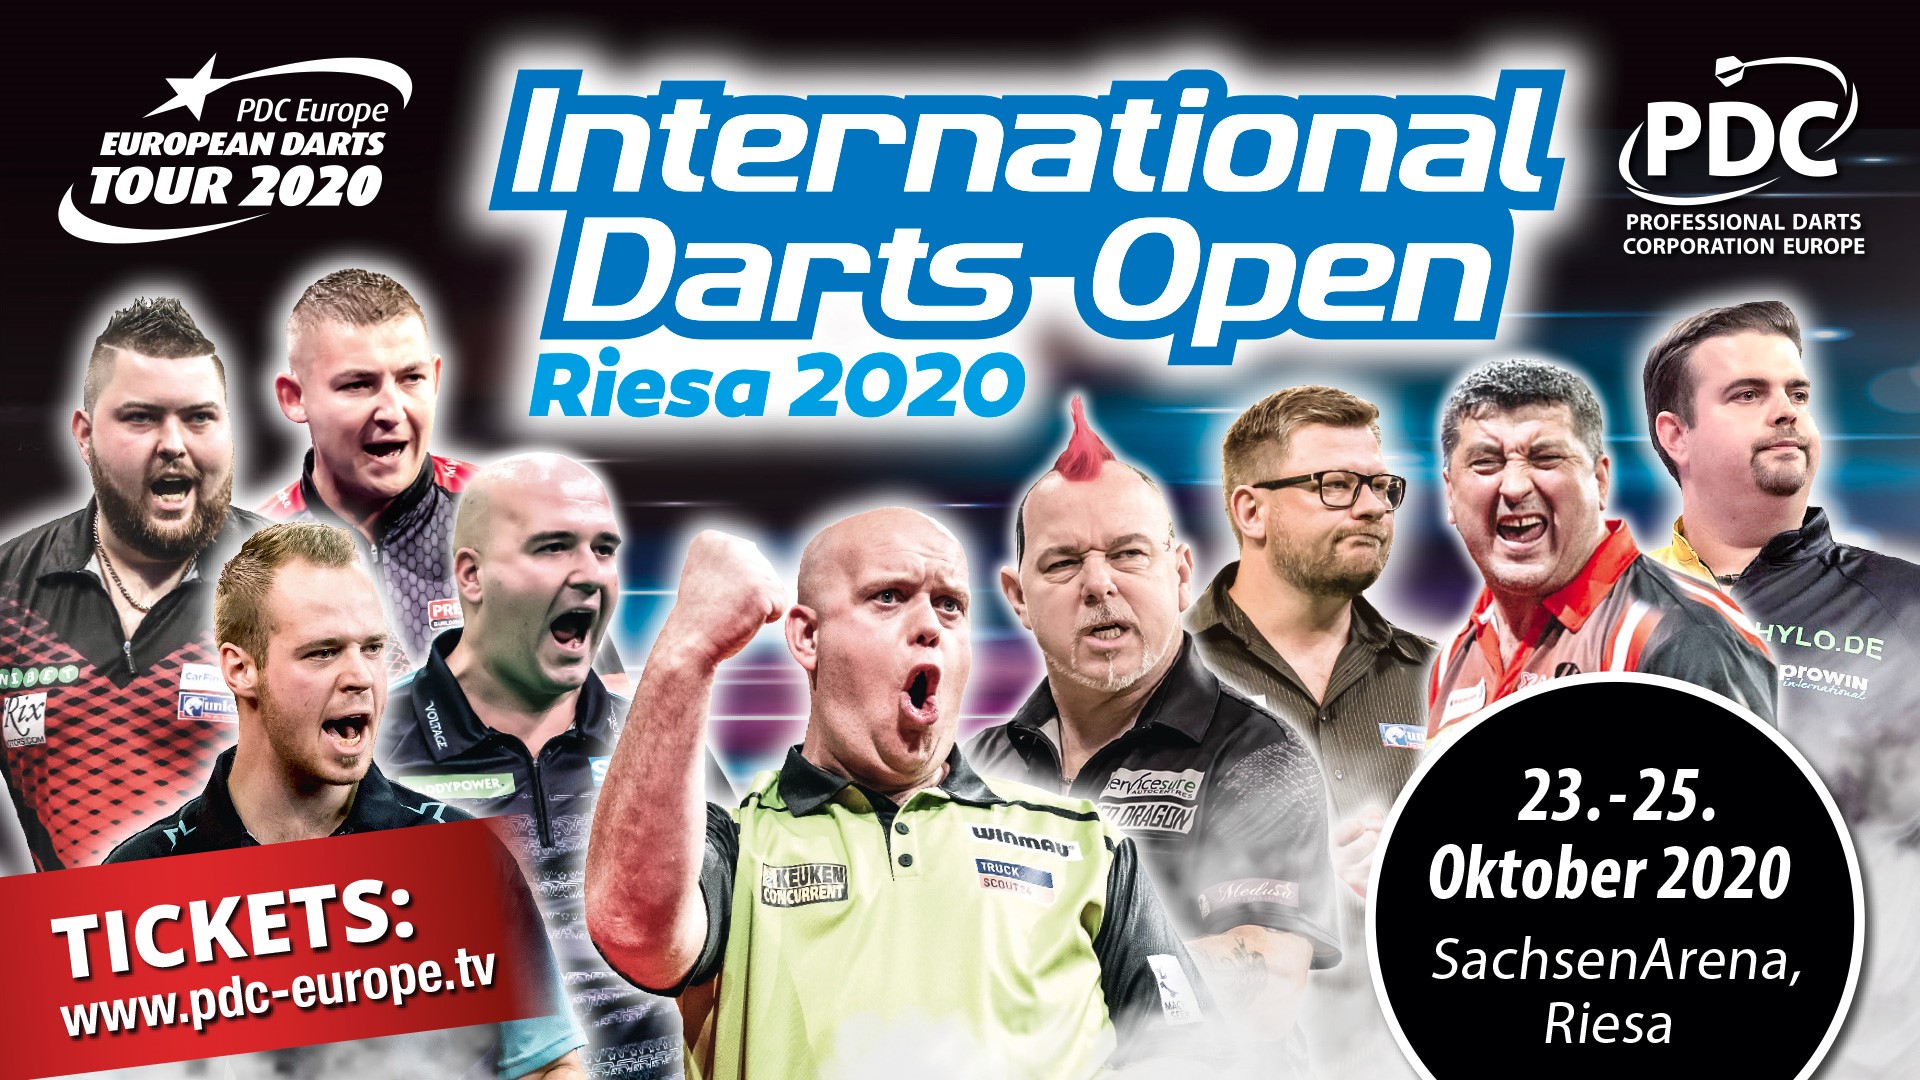 International Darts Open in Riesa